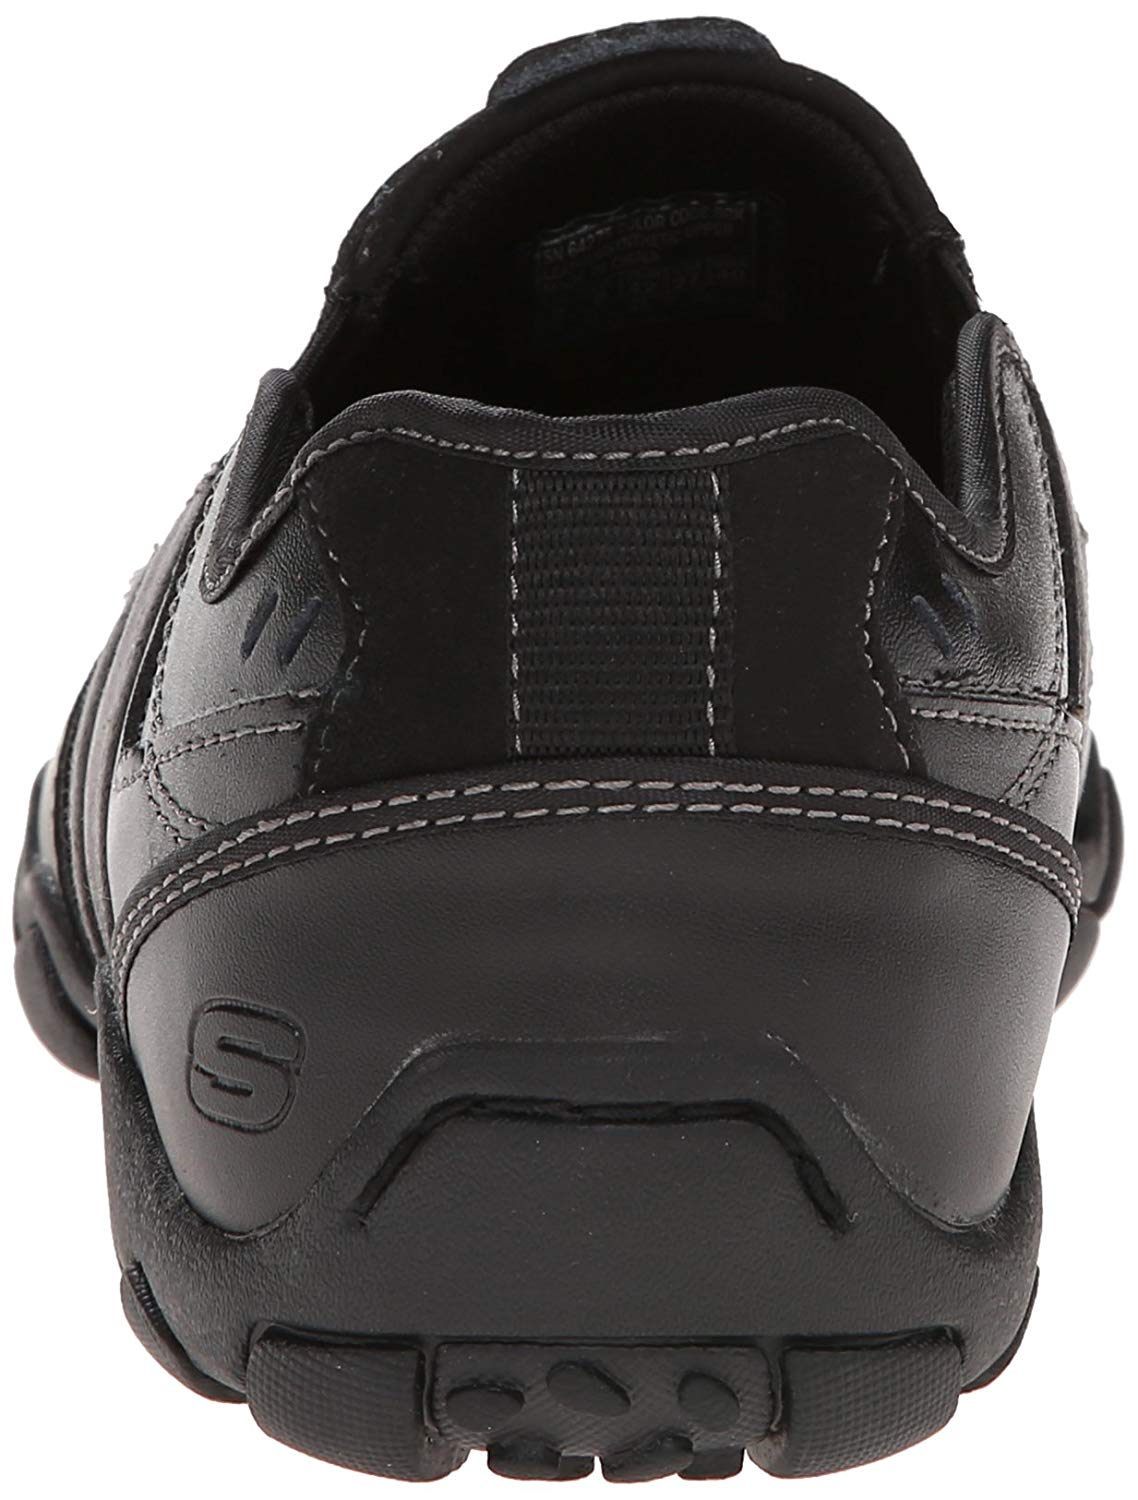 Skechers Men's Shoes Zinroy Leather Closed Toe Slip On, Black Leather ...